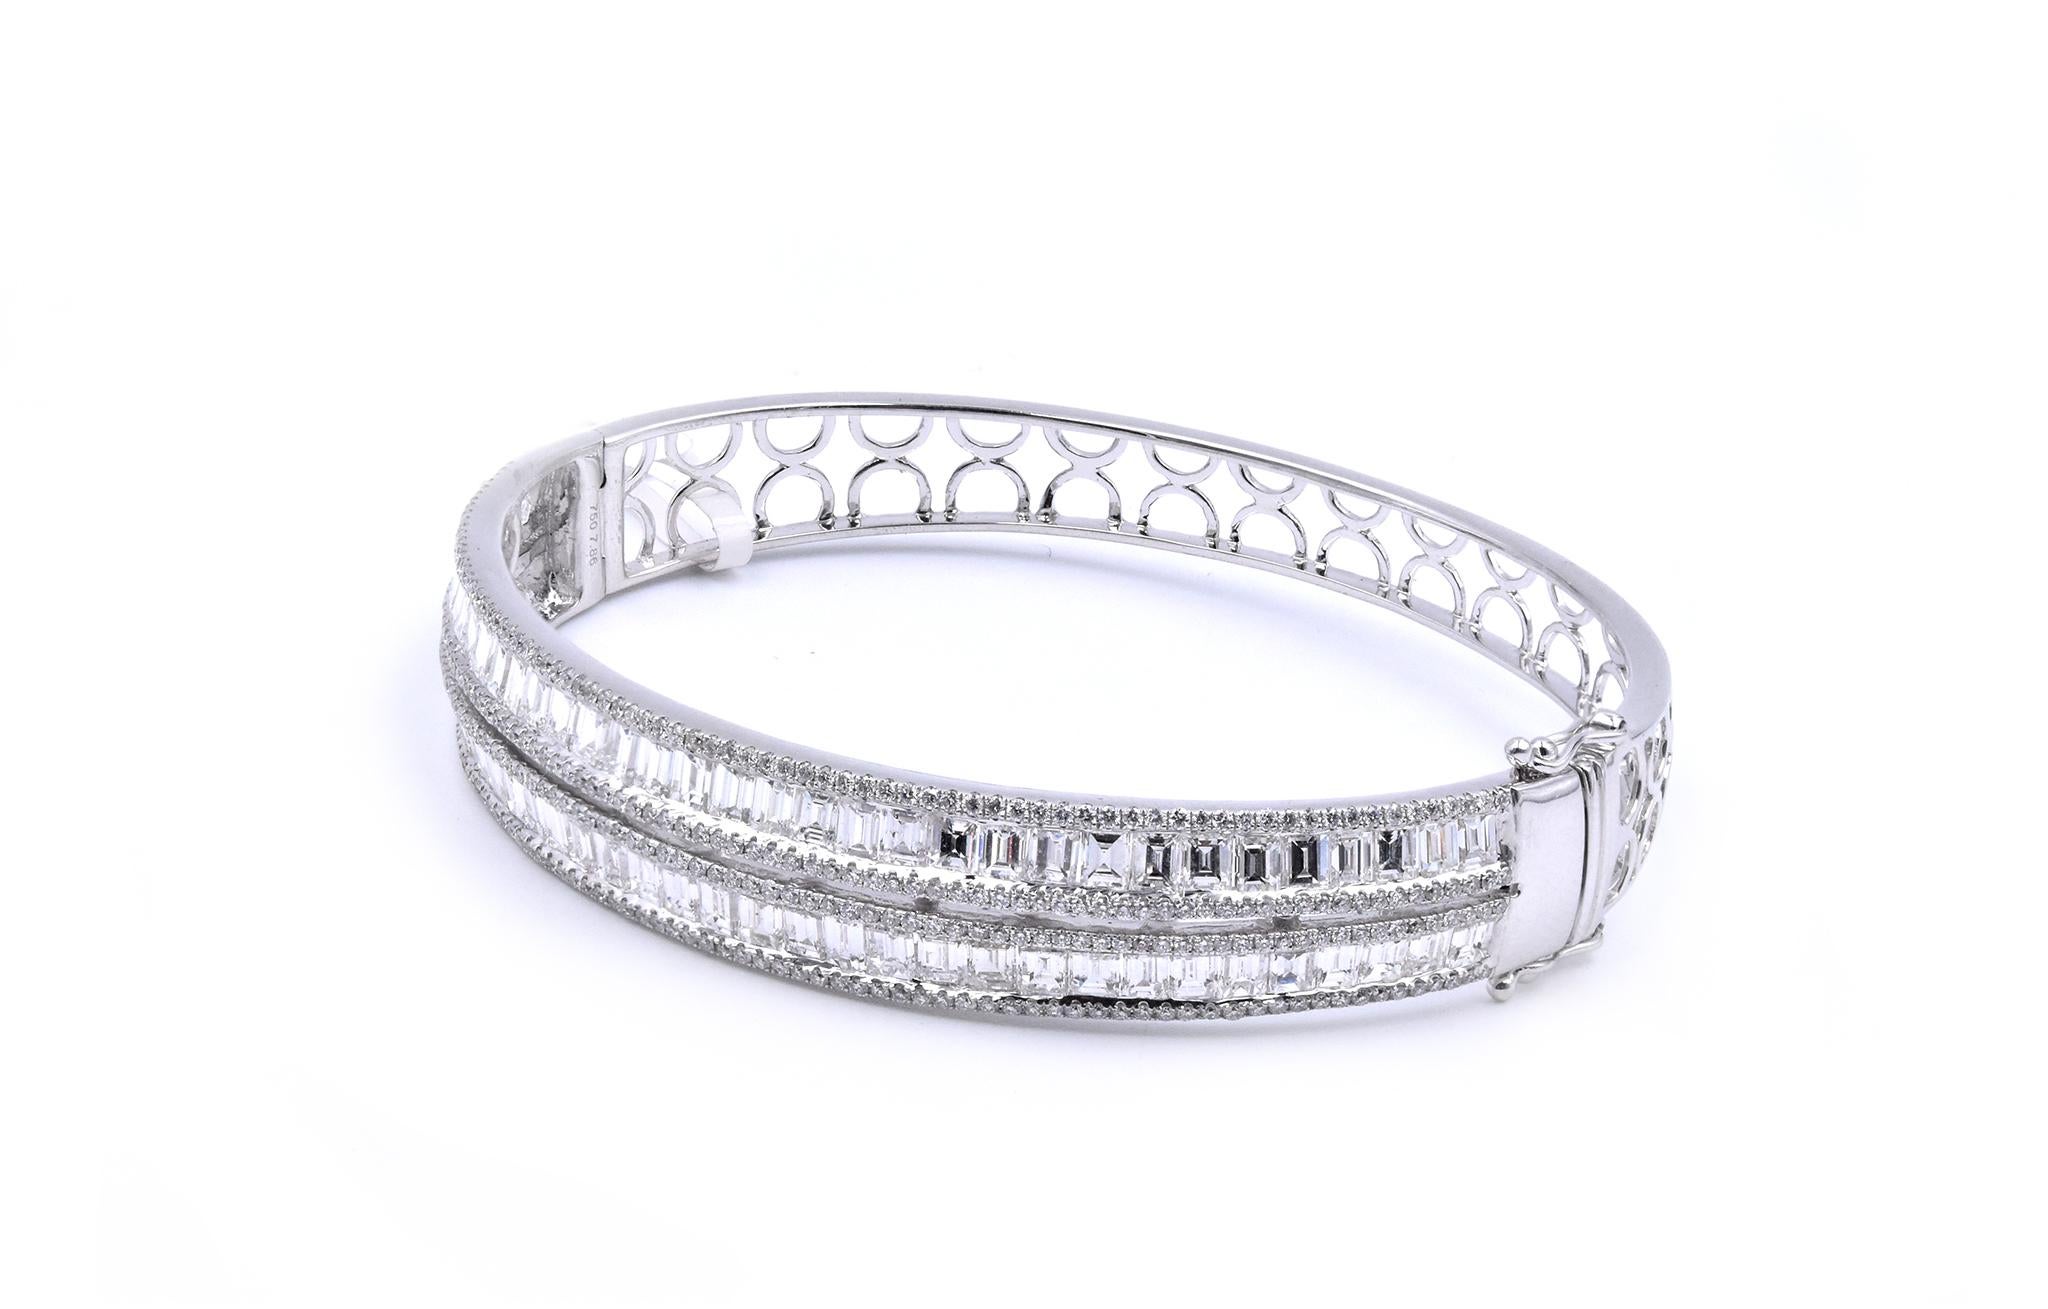 Mixed Cut 18 Karat White Gold Double Row Mosaic Set Diamond Bangle Bracelet